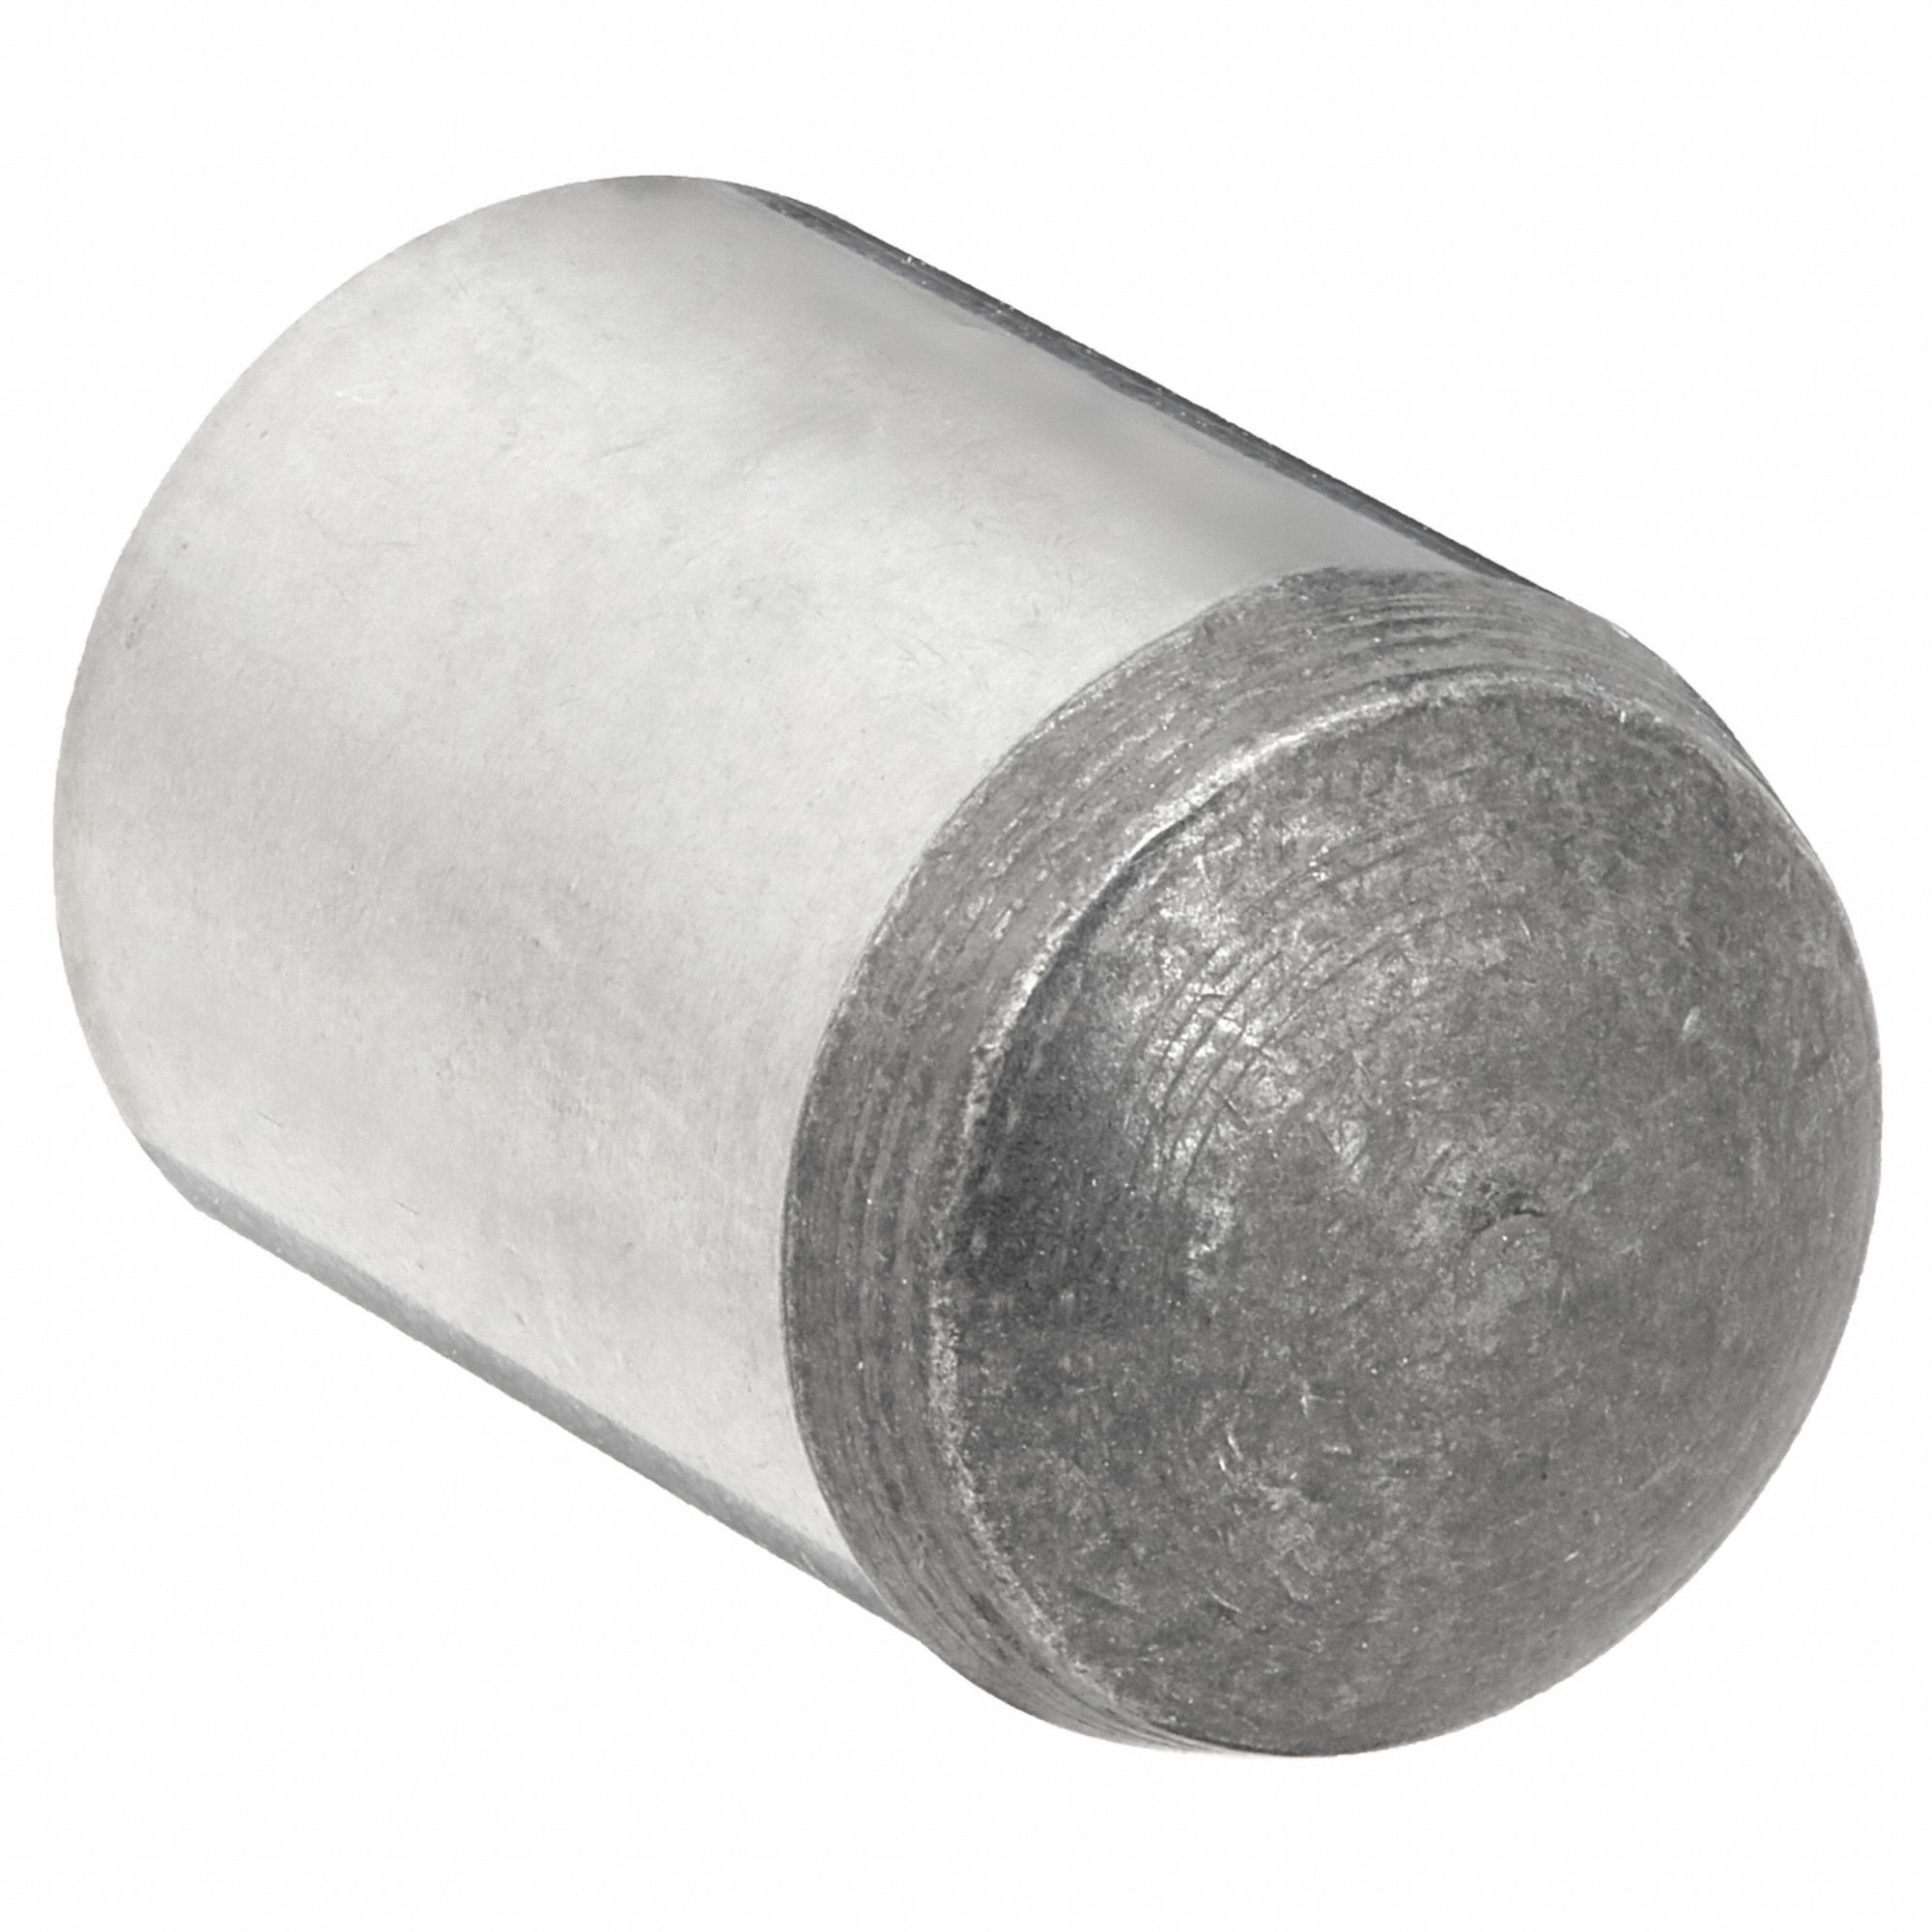 Dowel Pin Alloy Steel Assortment In 24 Hole Metal Locking Tray